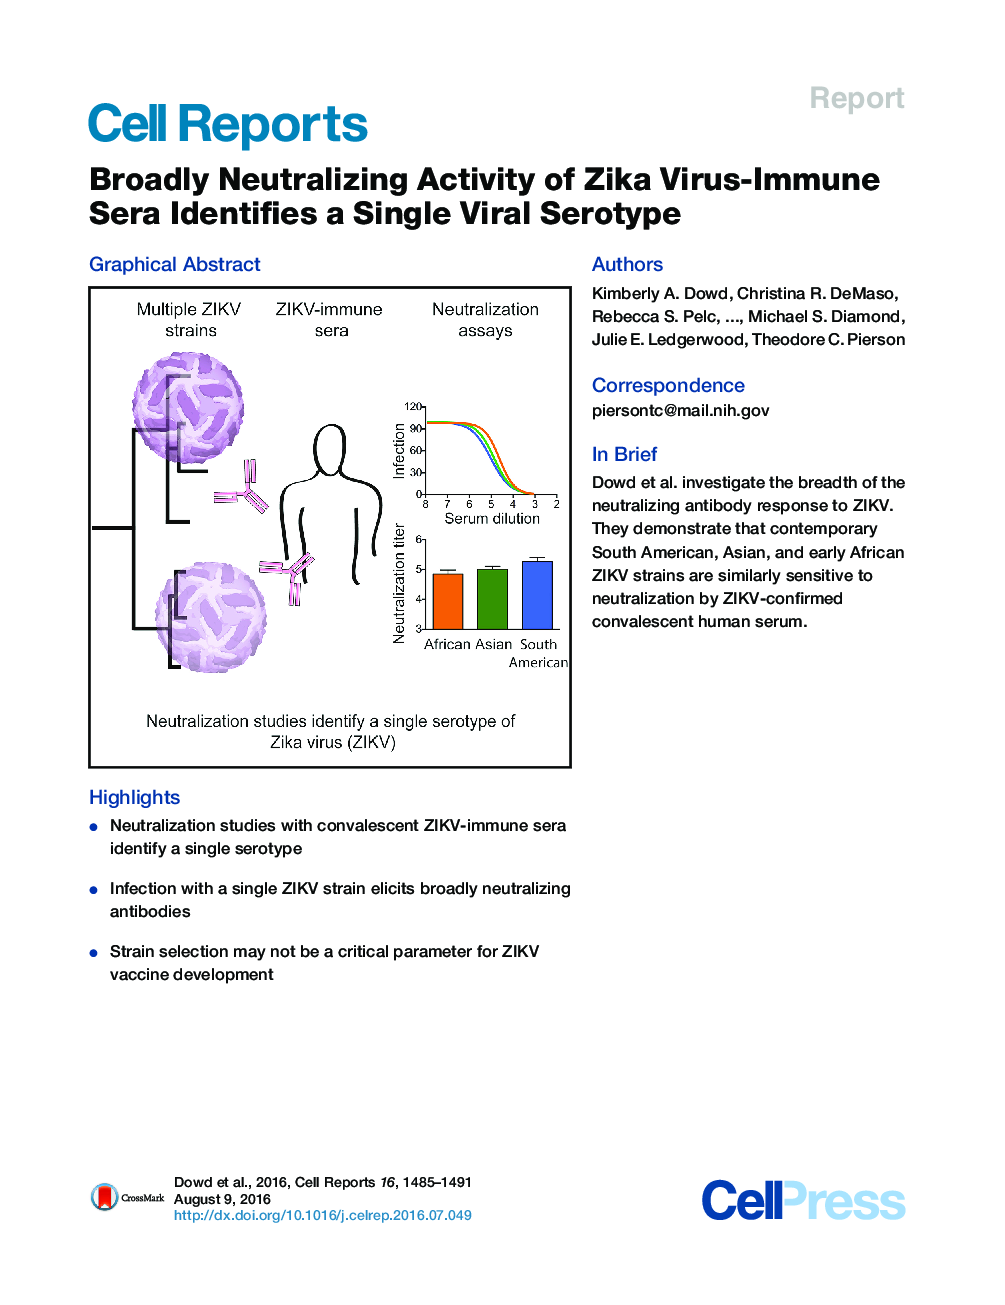 Broadly Neutralizing Activity of Zika Virus-Immune Sera Identifies a Single Viral Serotype